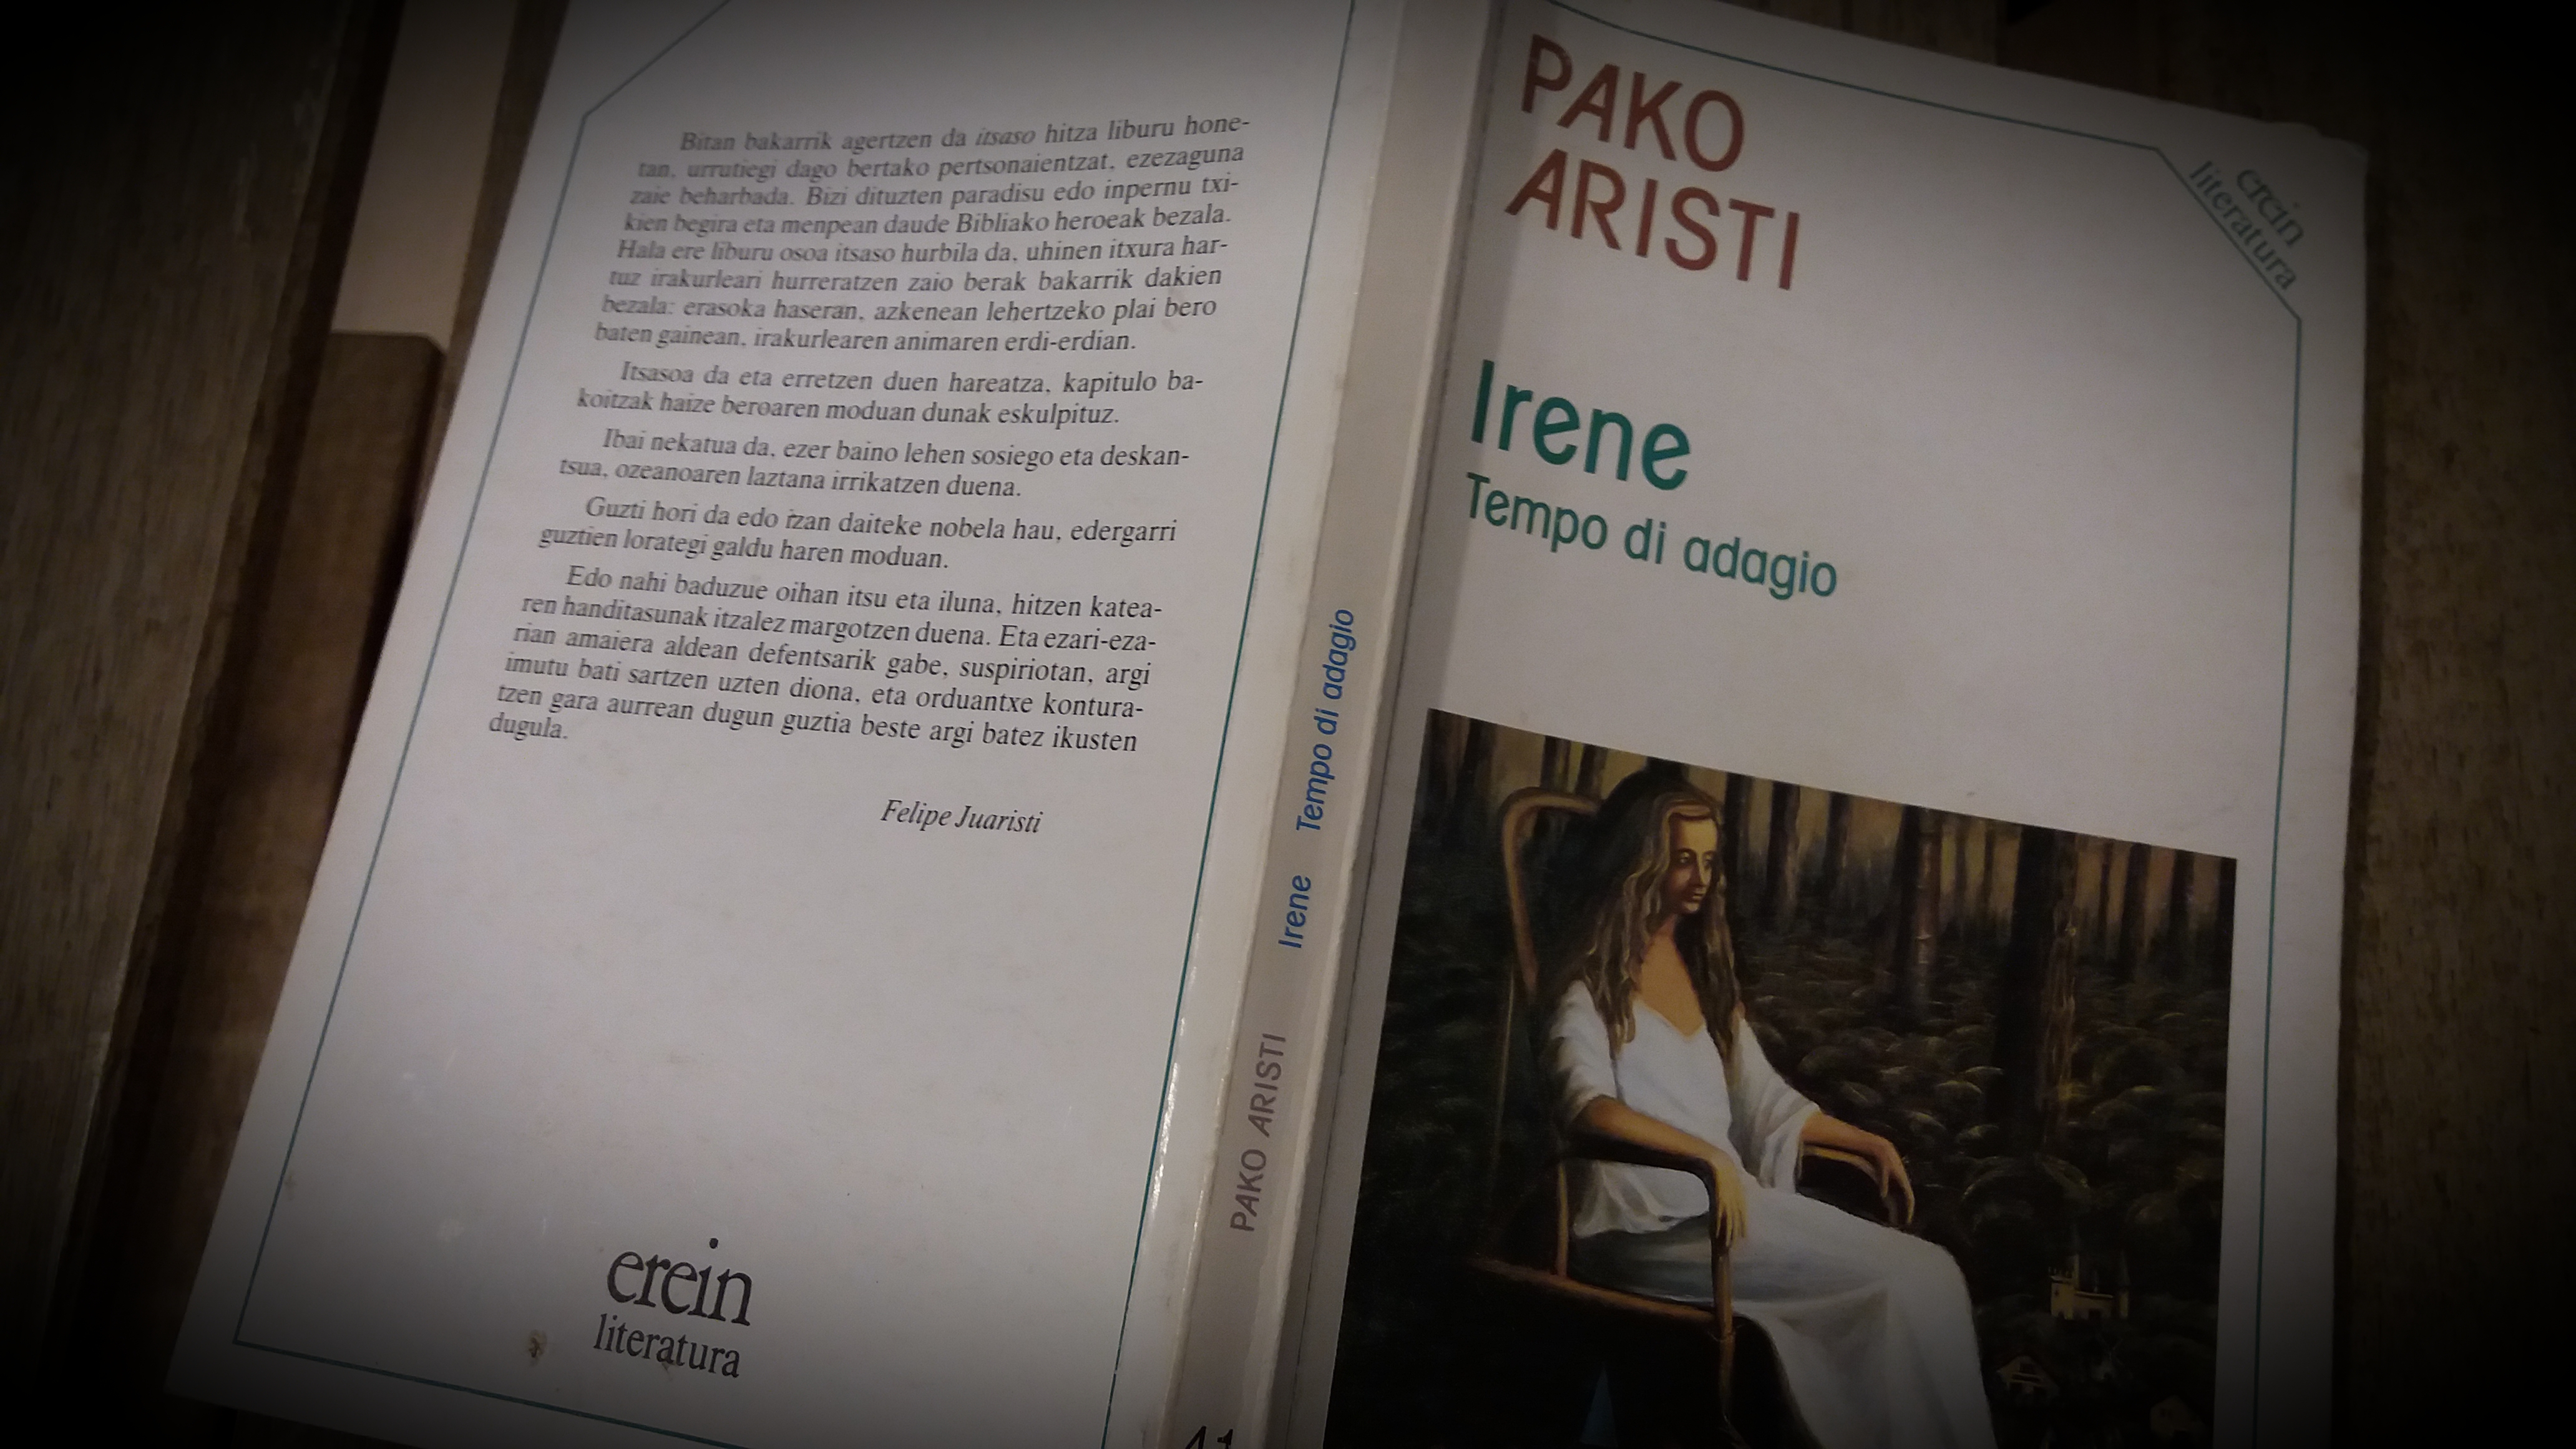 Irene, Pako Aristi, 1987